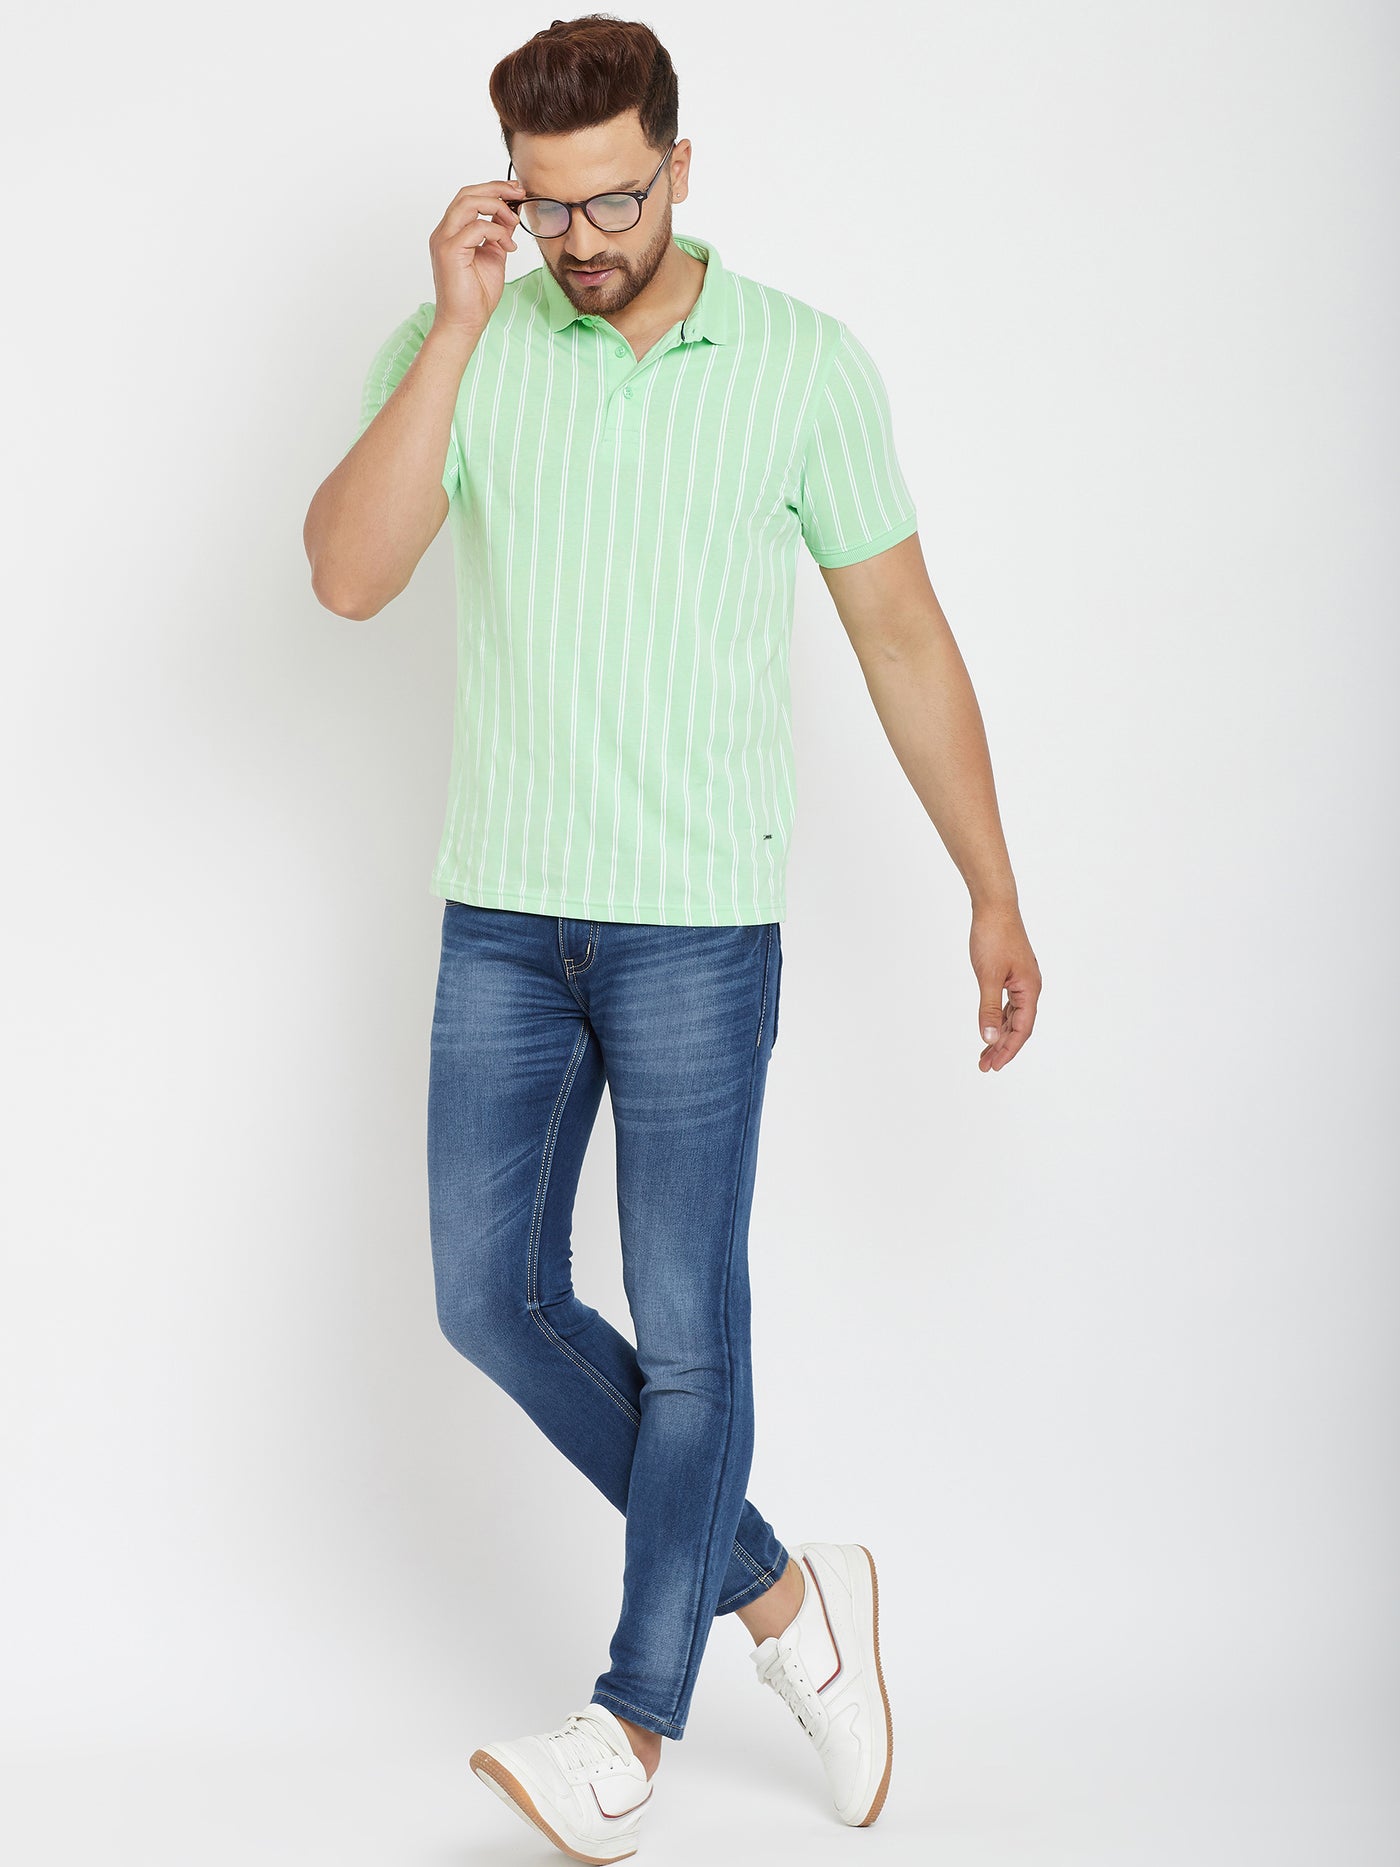 Green Striped Polo T-Shirt - Men T-Shirts